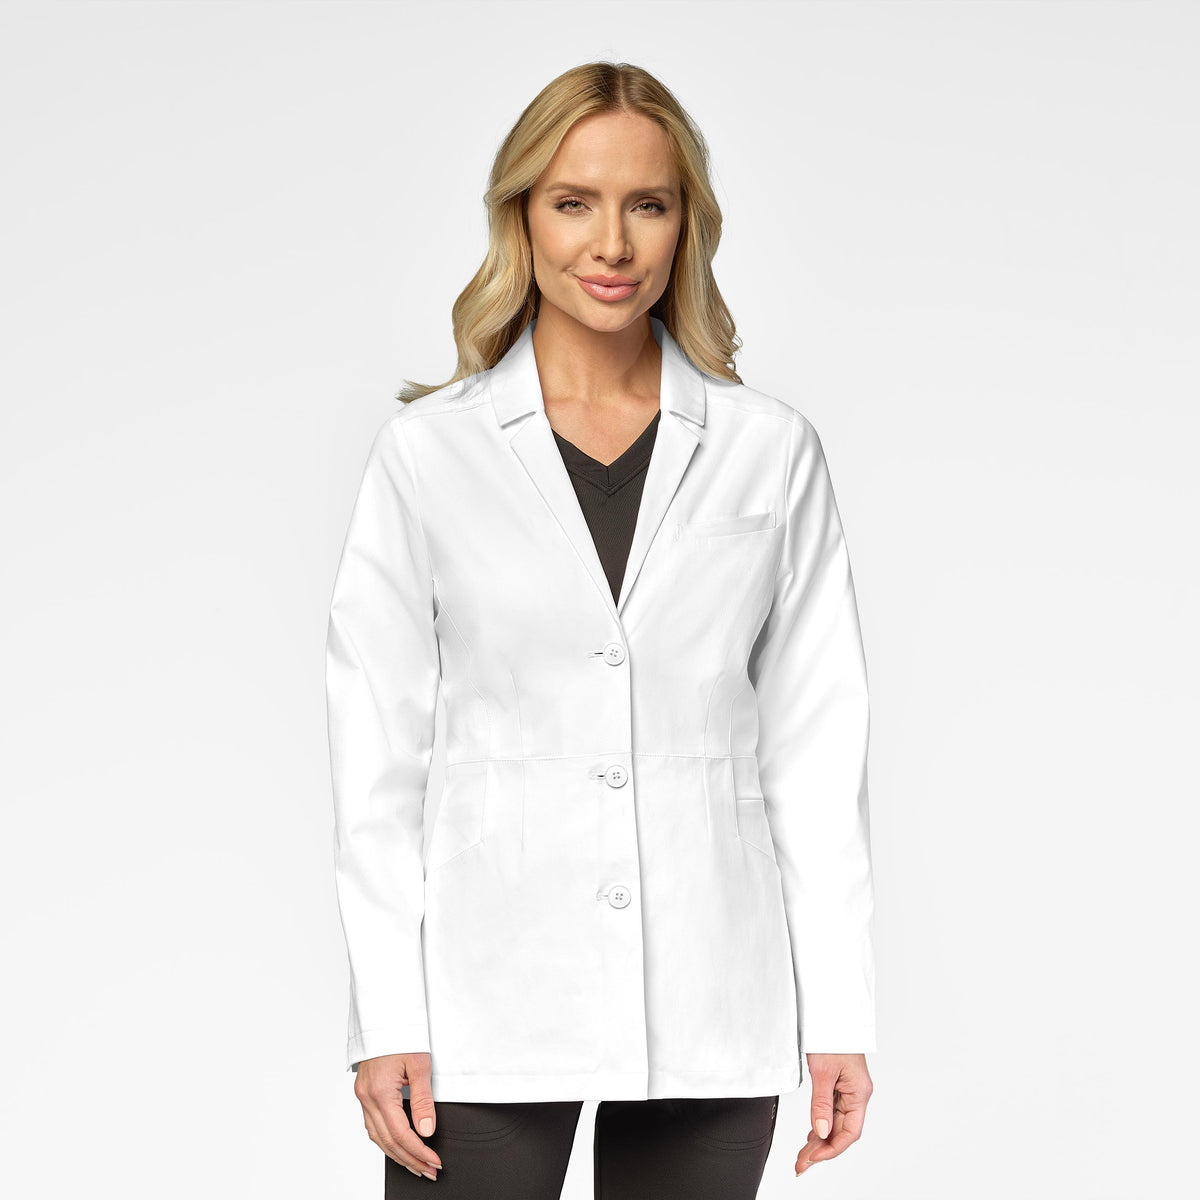 Slate Women's 28 Inch Doctors Coat - White Coat